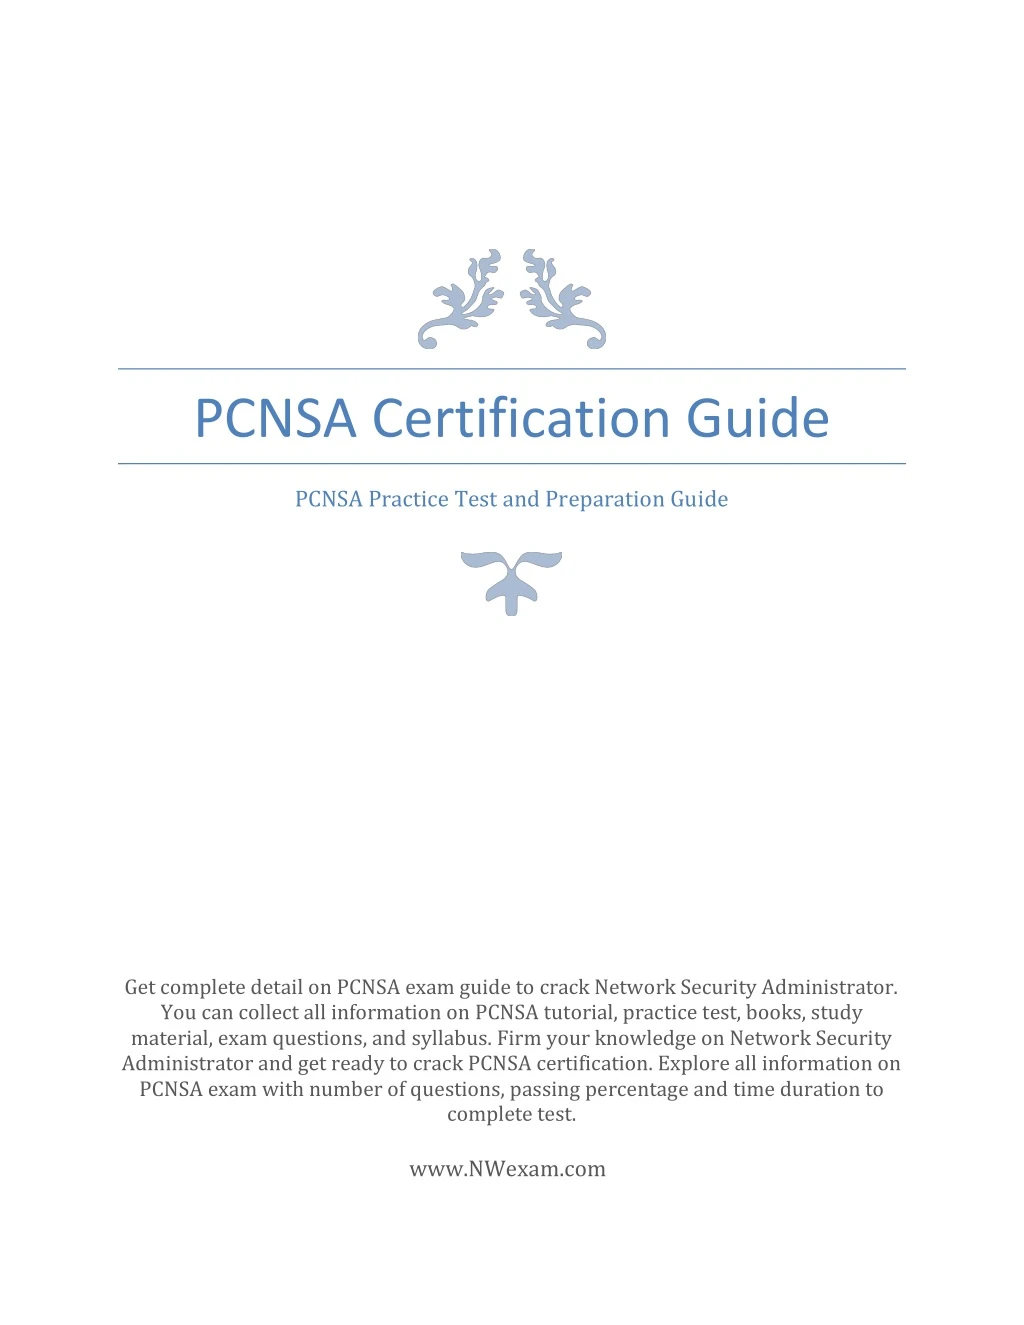 pcnsa certification guide